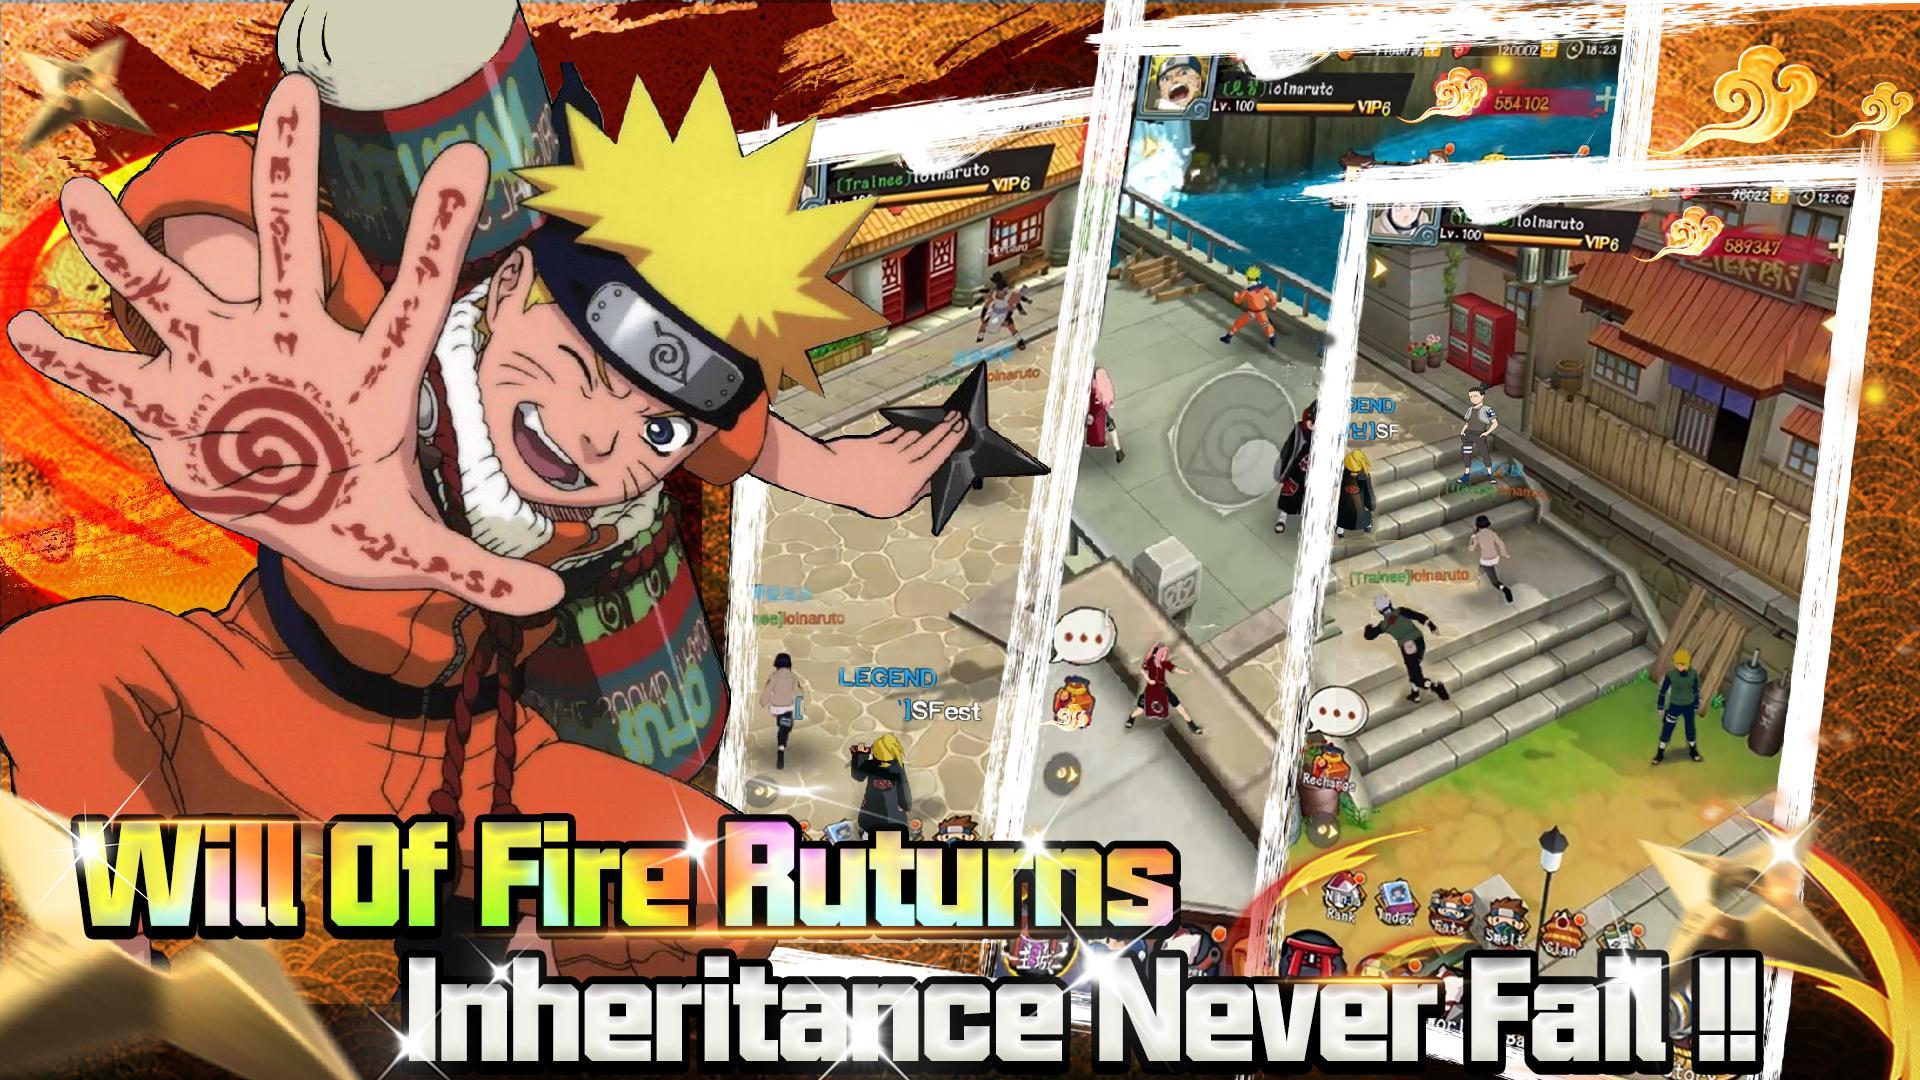 Download Naruto Shippuden: Ultimate Ninja Storm 4 APK 1.0 for